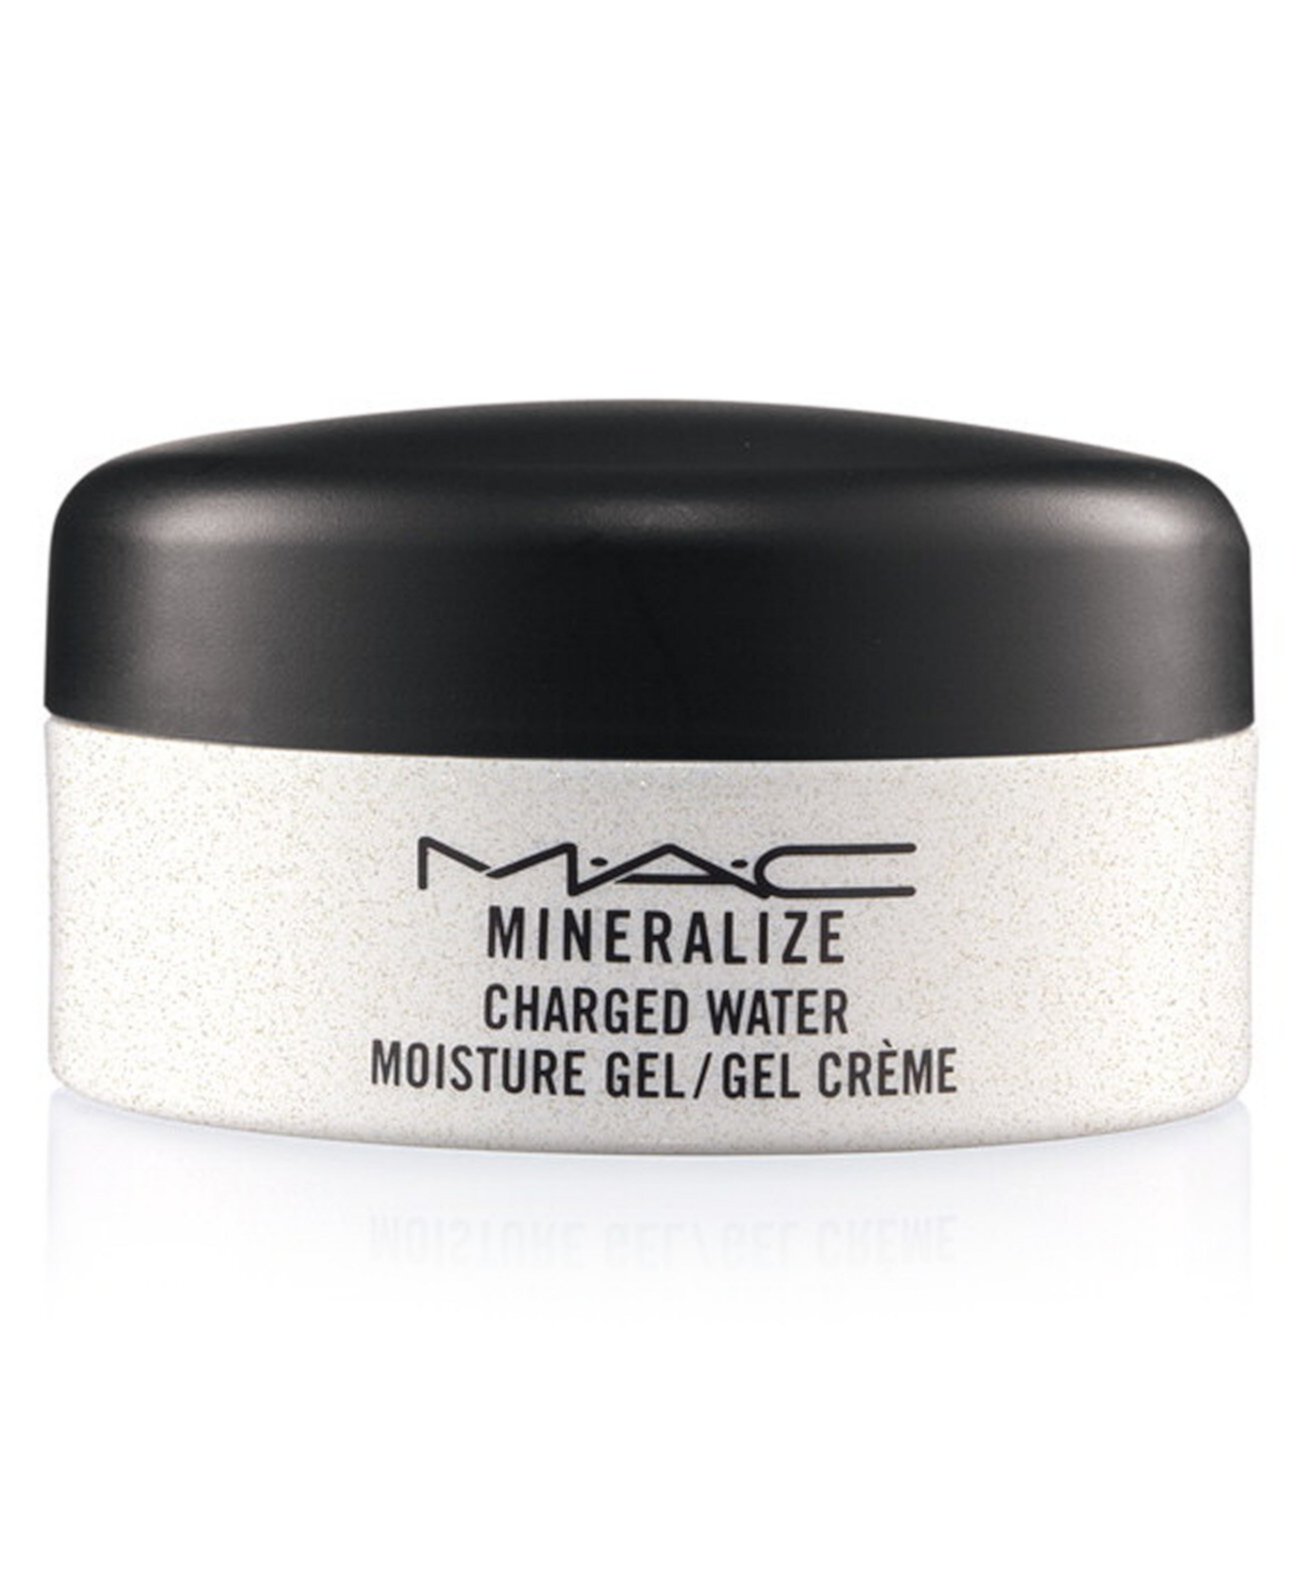 Увлажняющий гель Mineralize Charged Water, 1,7 унции. MAC Cosmetics